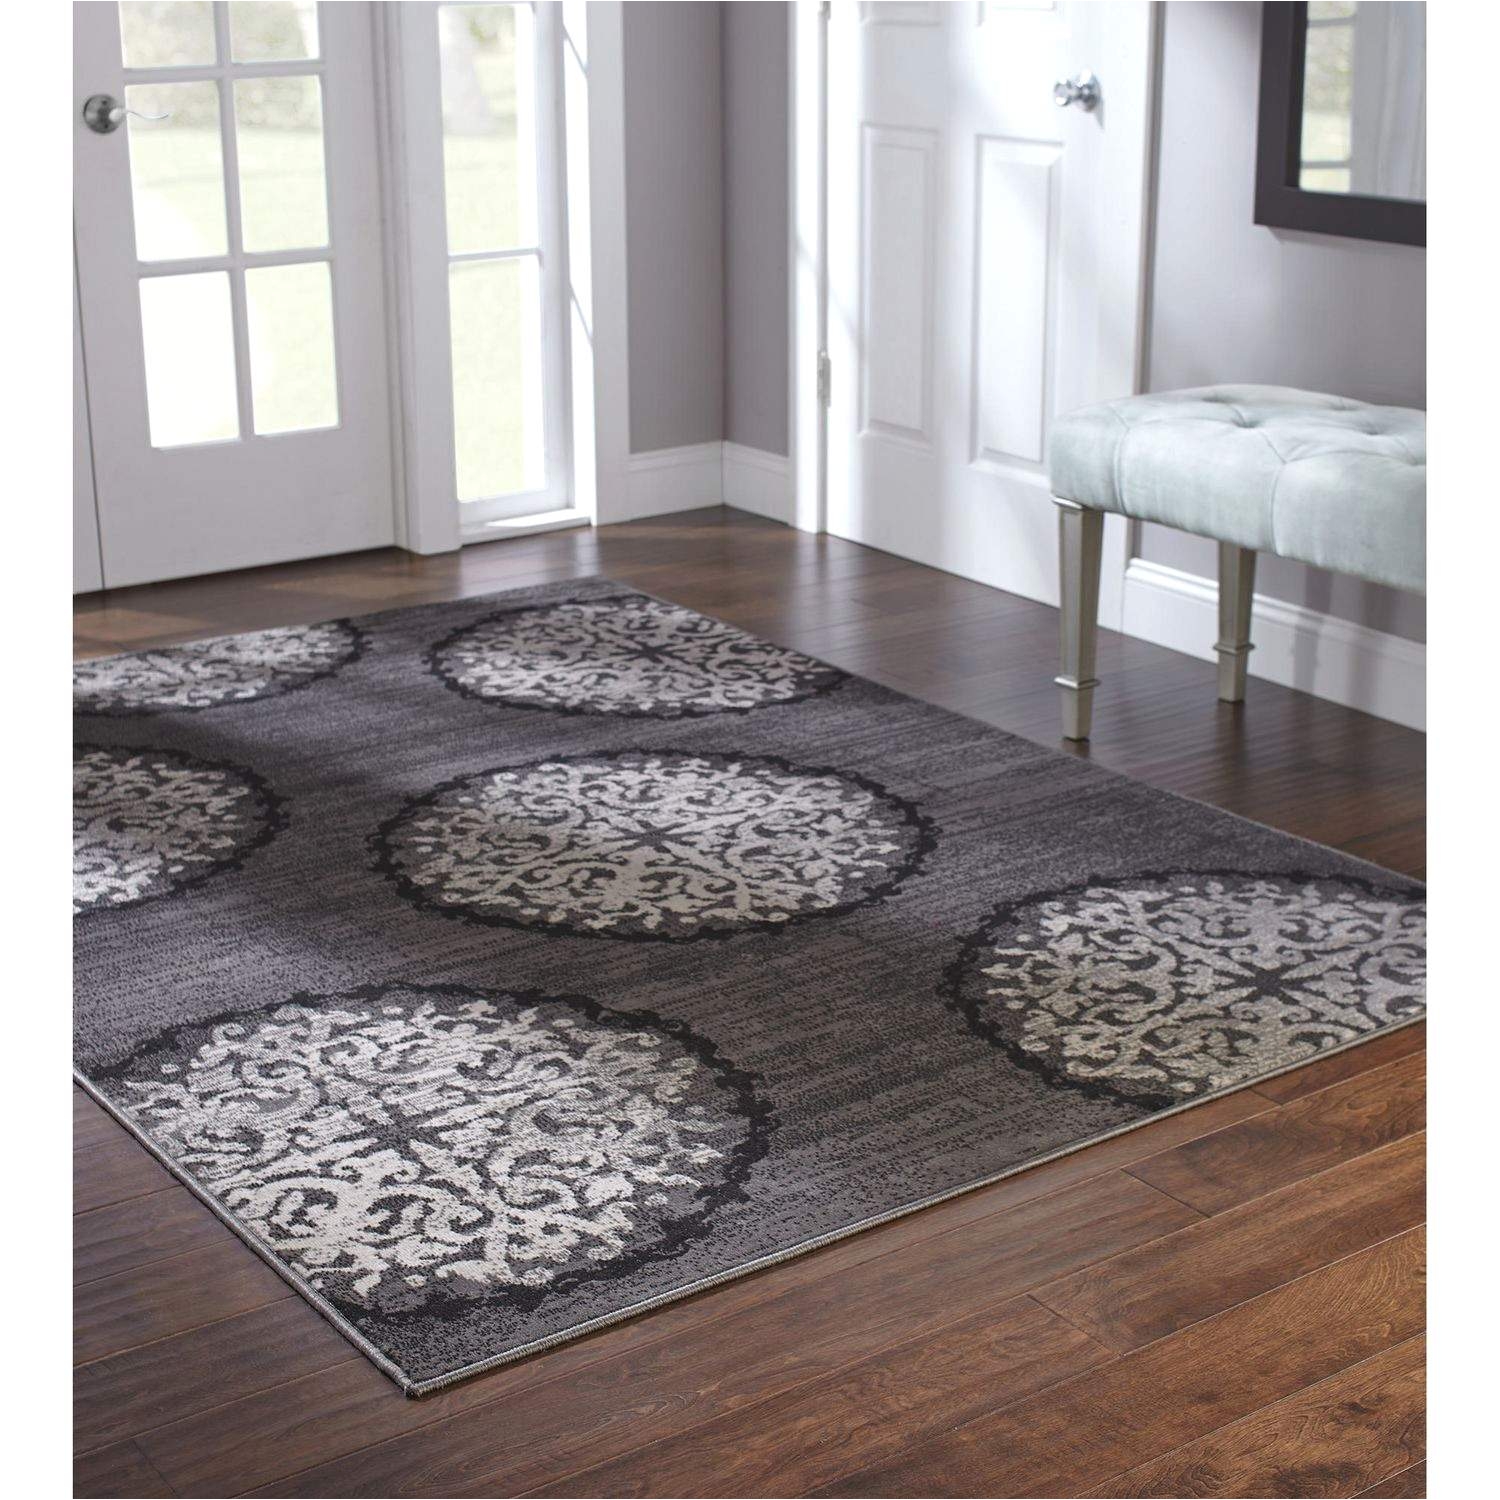 black area rugs walmart lovely chair walmart area rugs 8x10 best fresh walmart outdoor rug